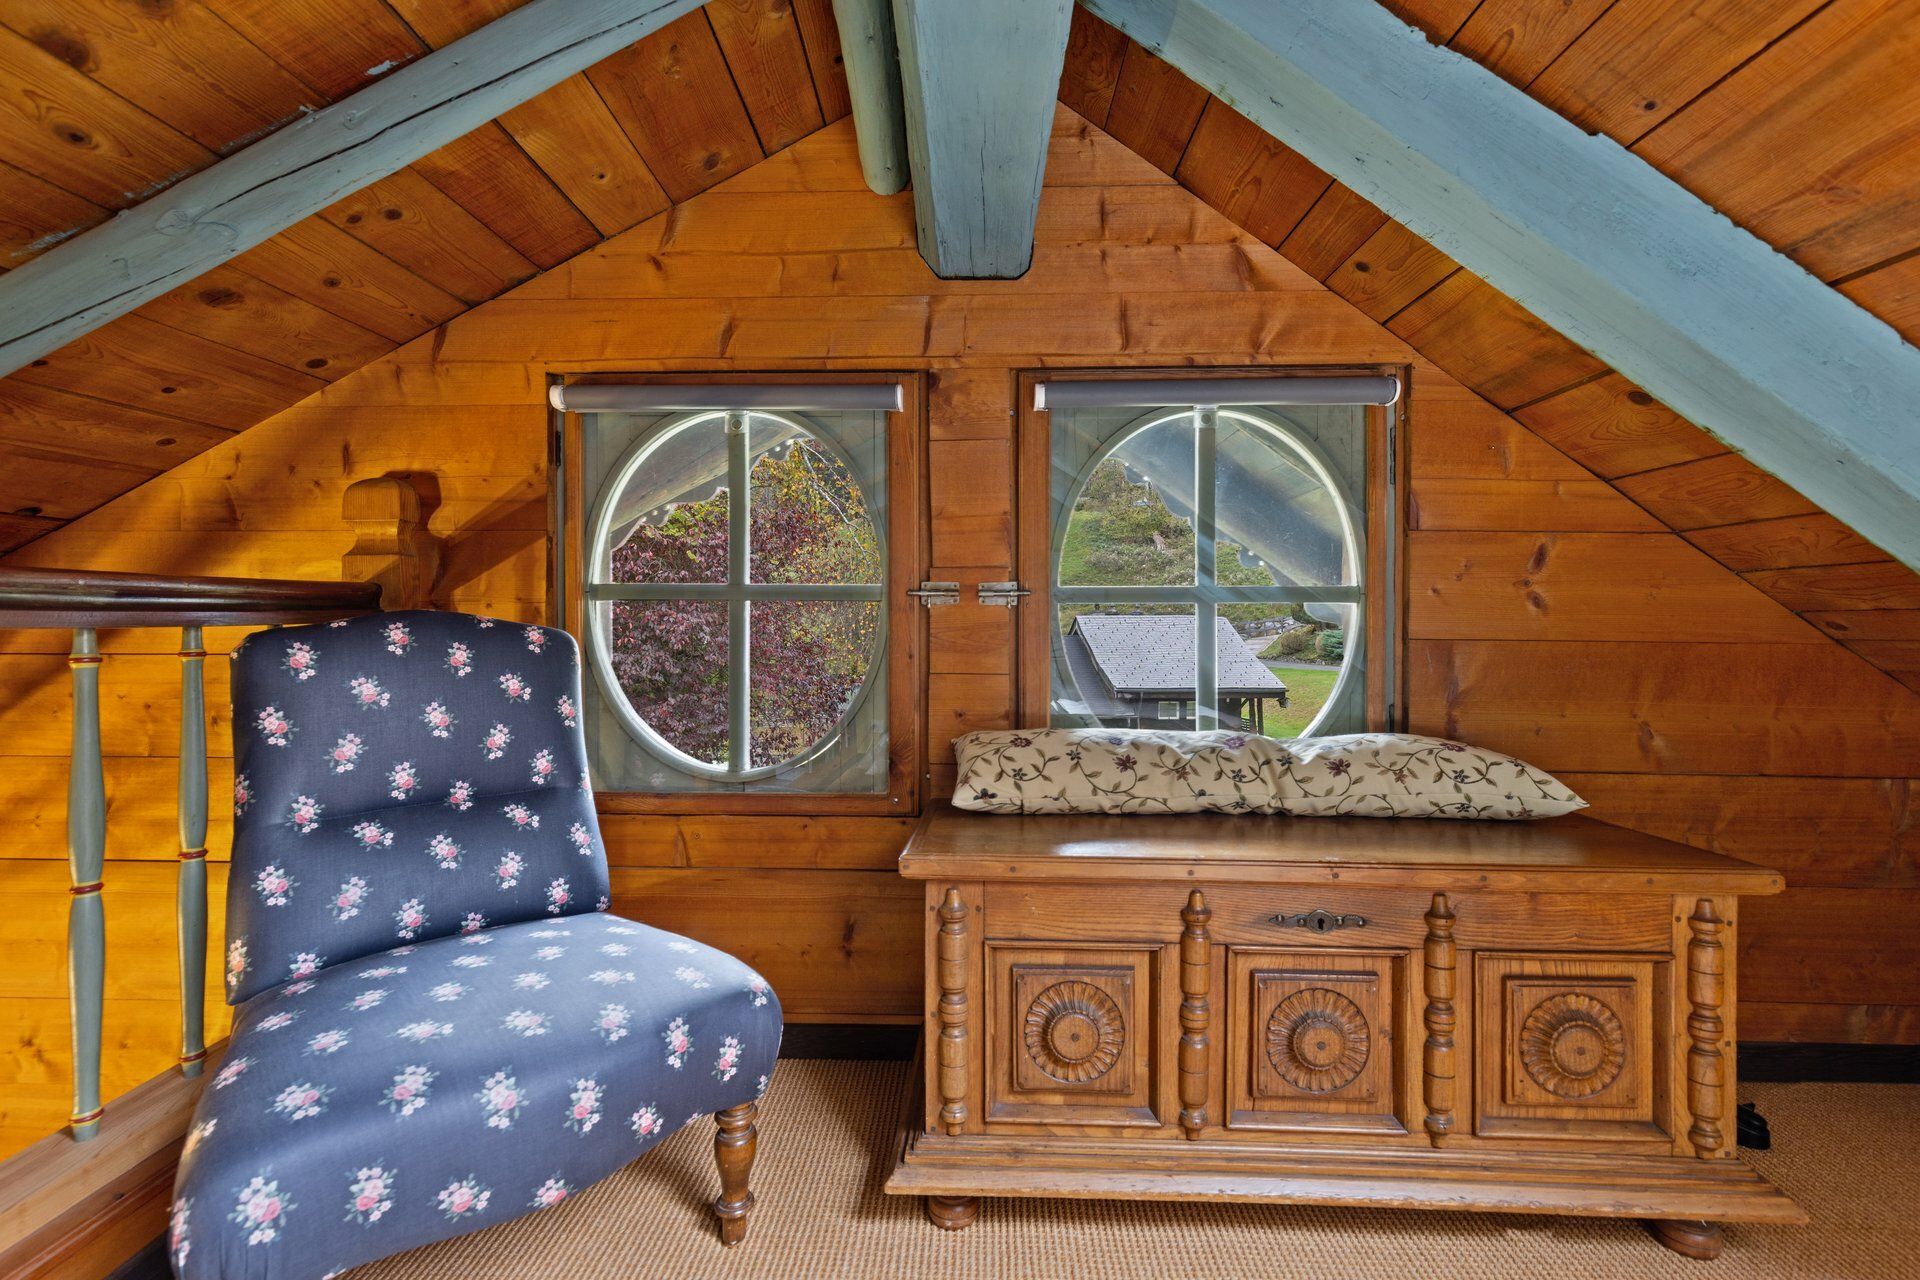 The Lodge attic bedroom